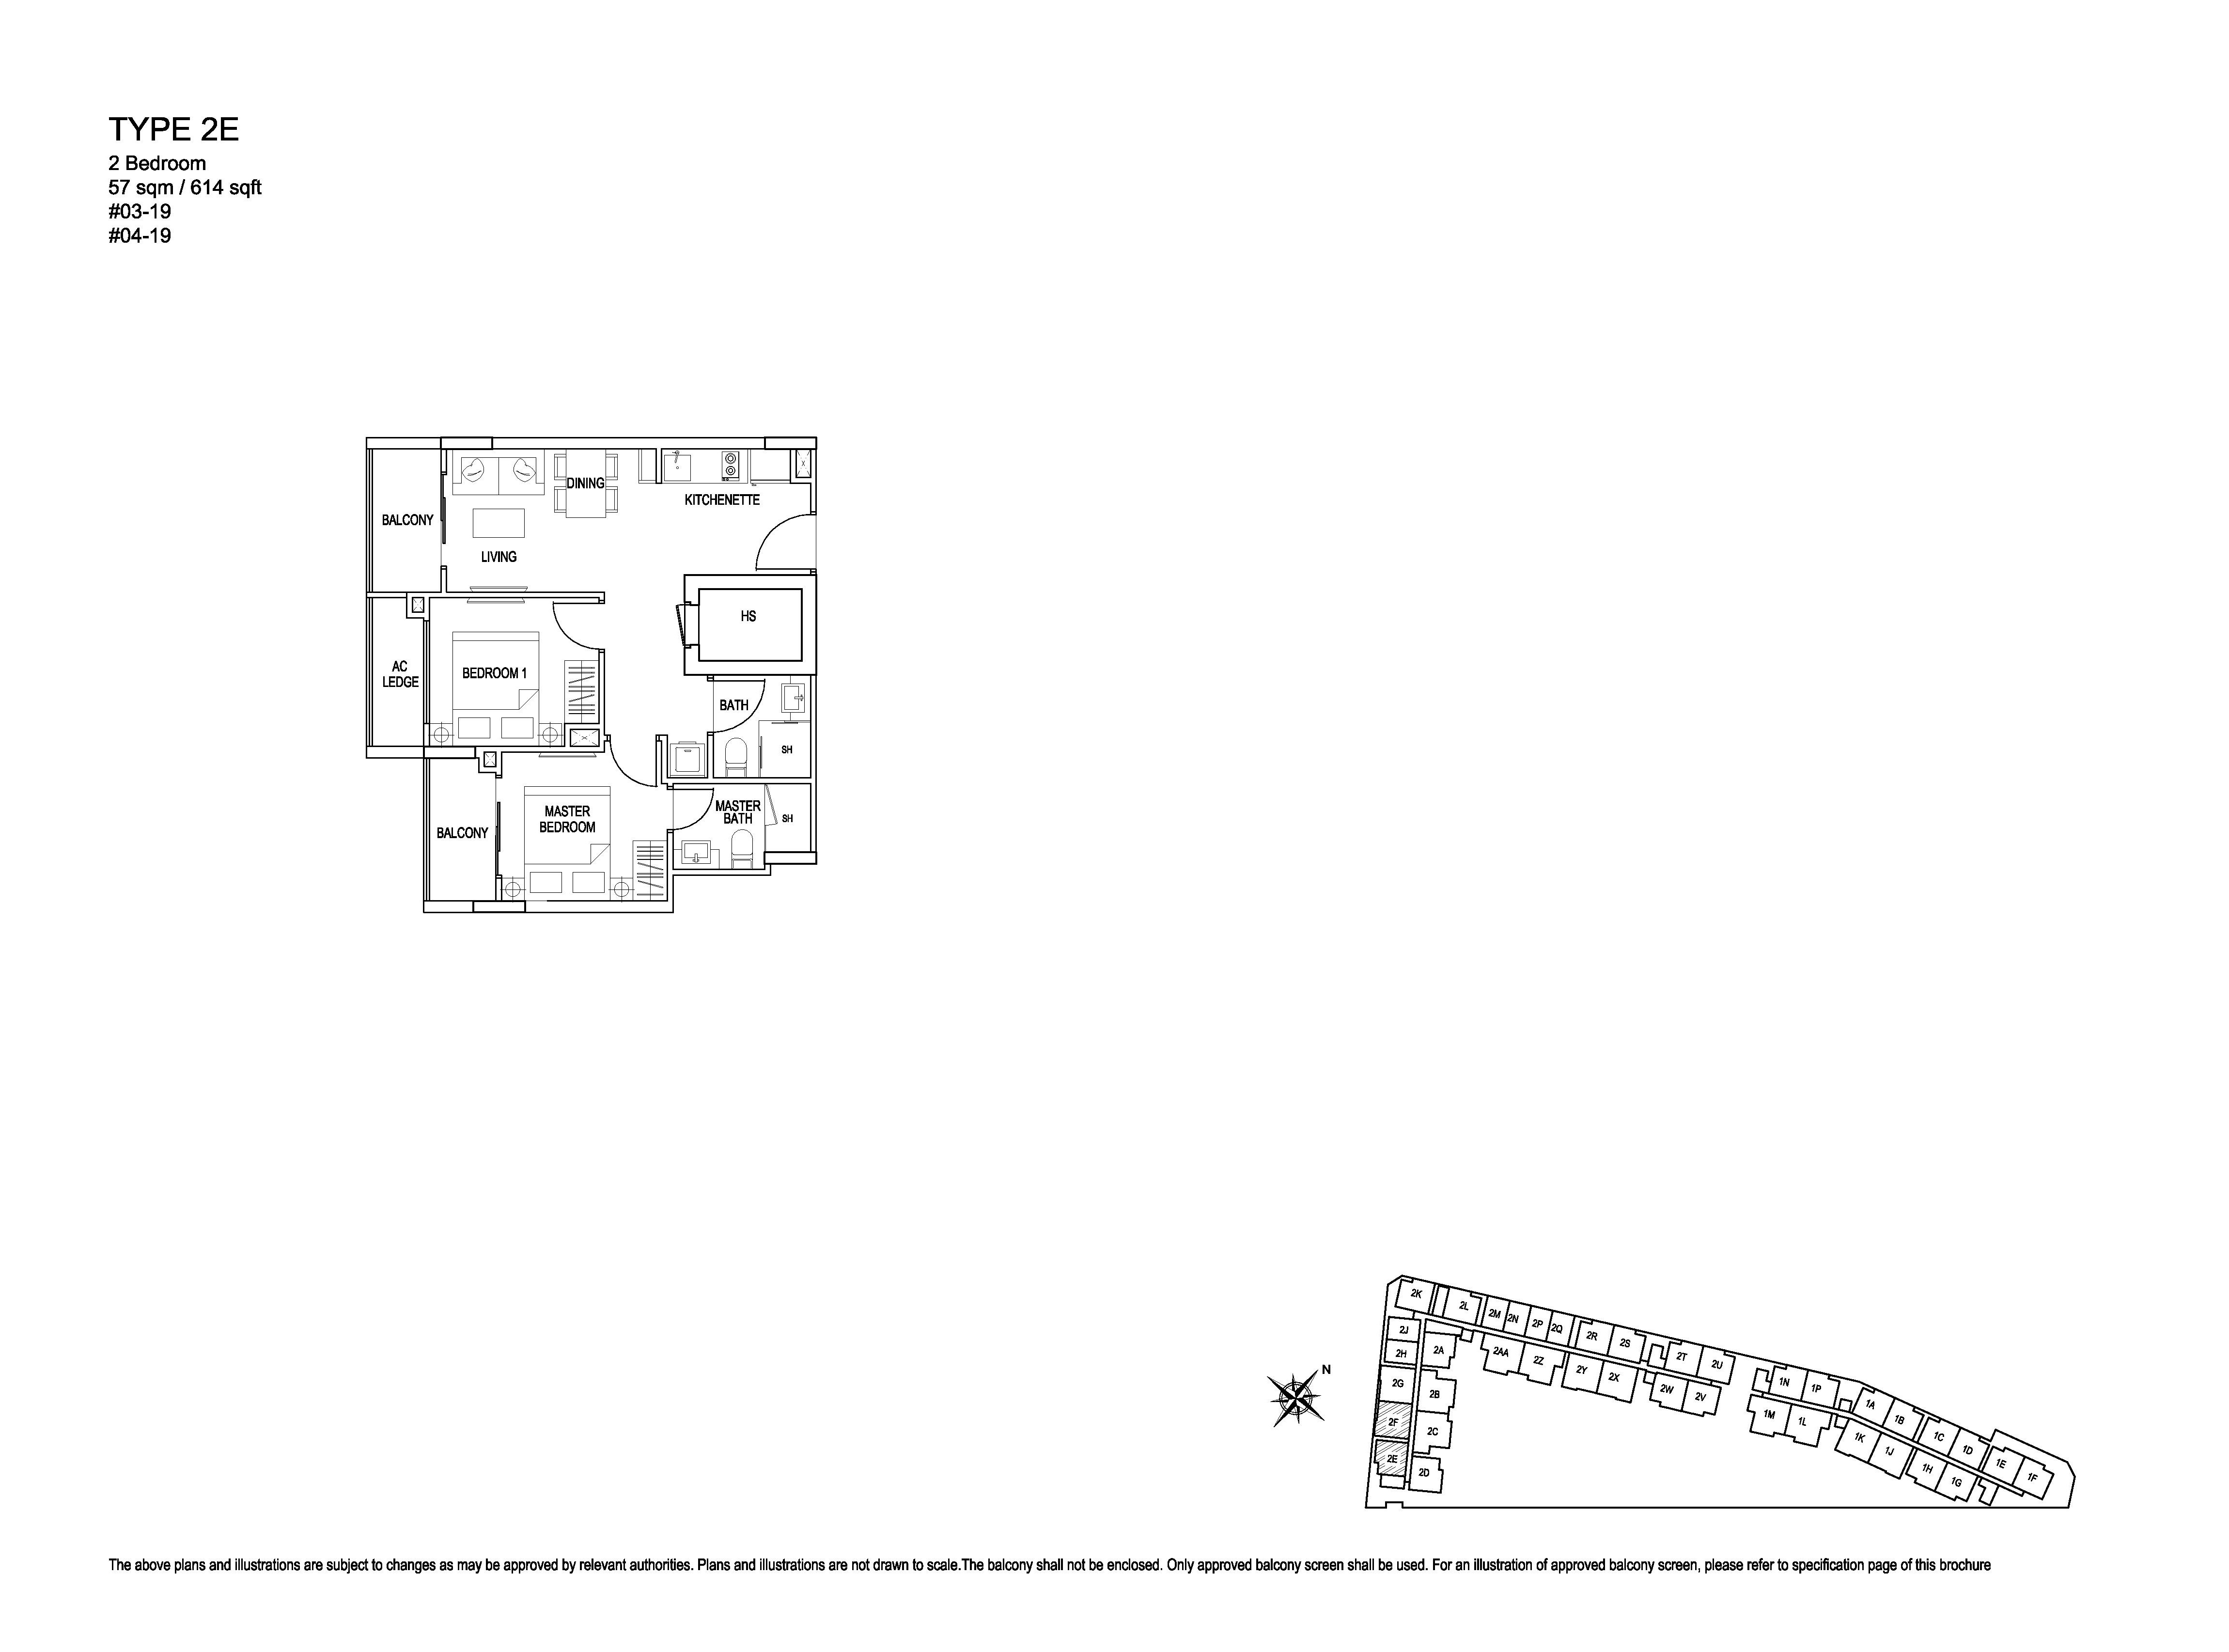 Kensington Square 2 Bedroom Floor Plans Type 2E